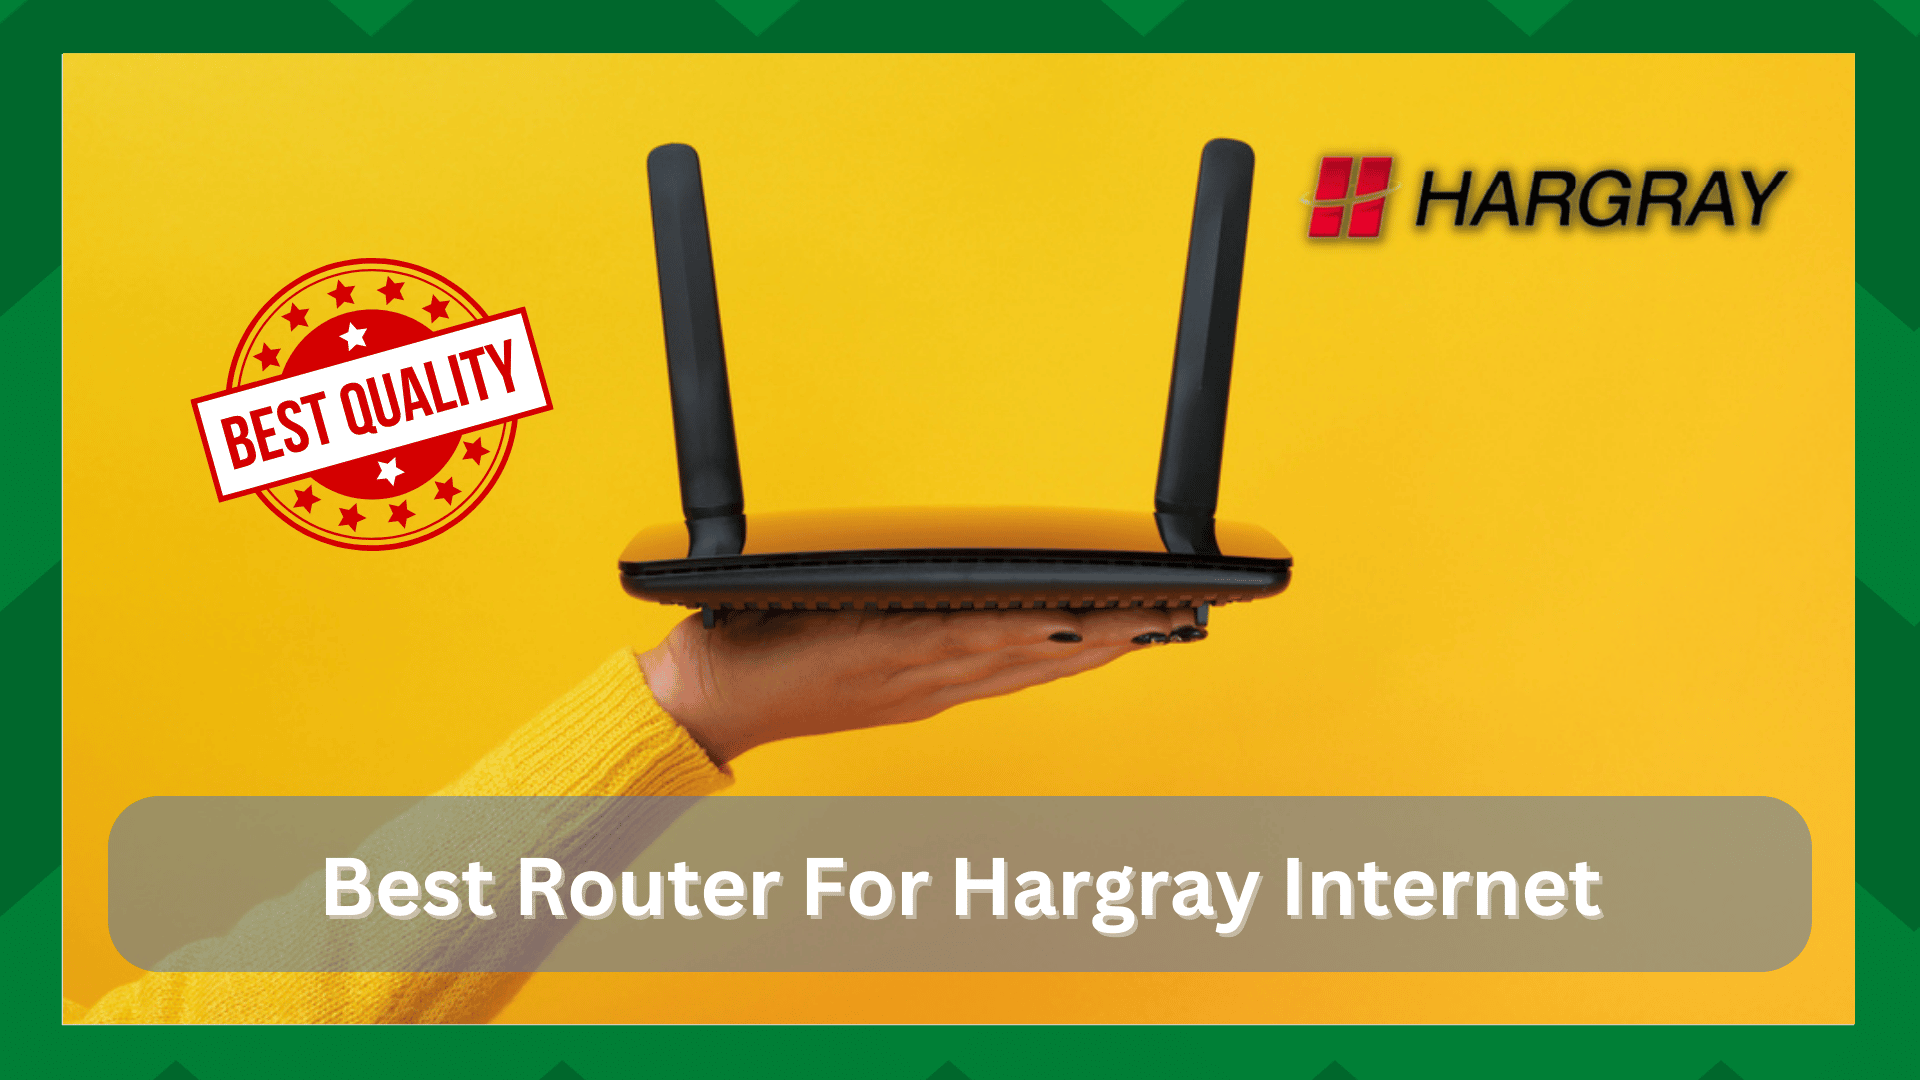 Hargray Internet을 위한 7가지 최고의 라우터(권장)